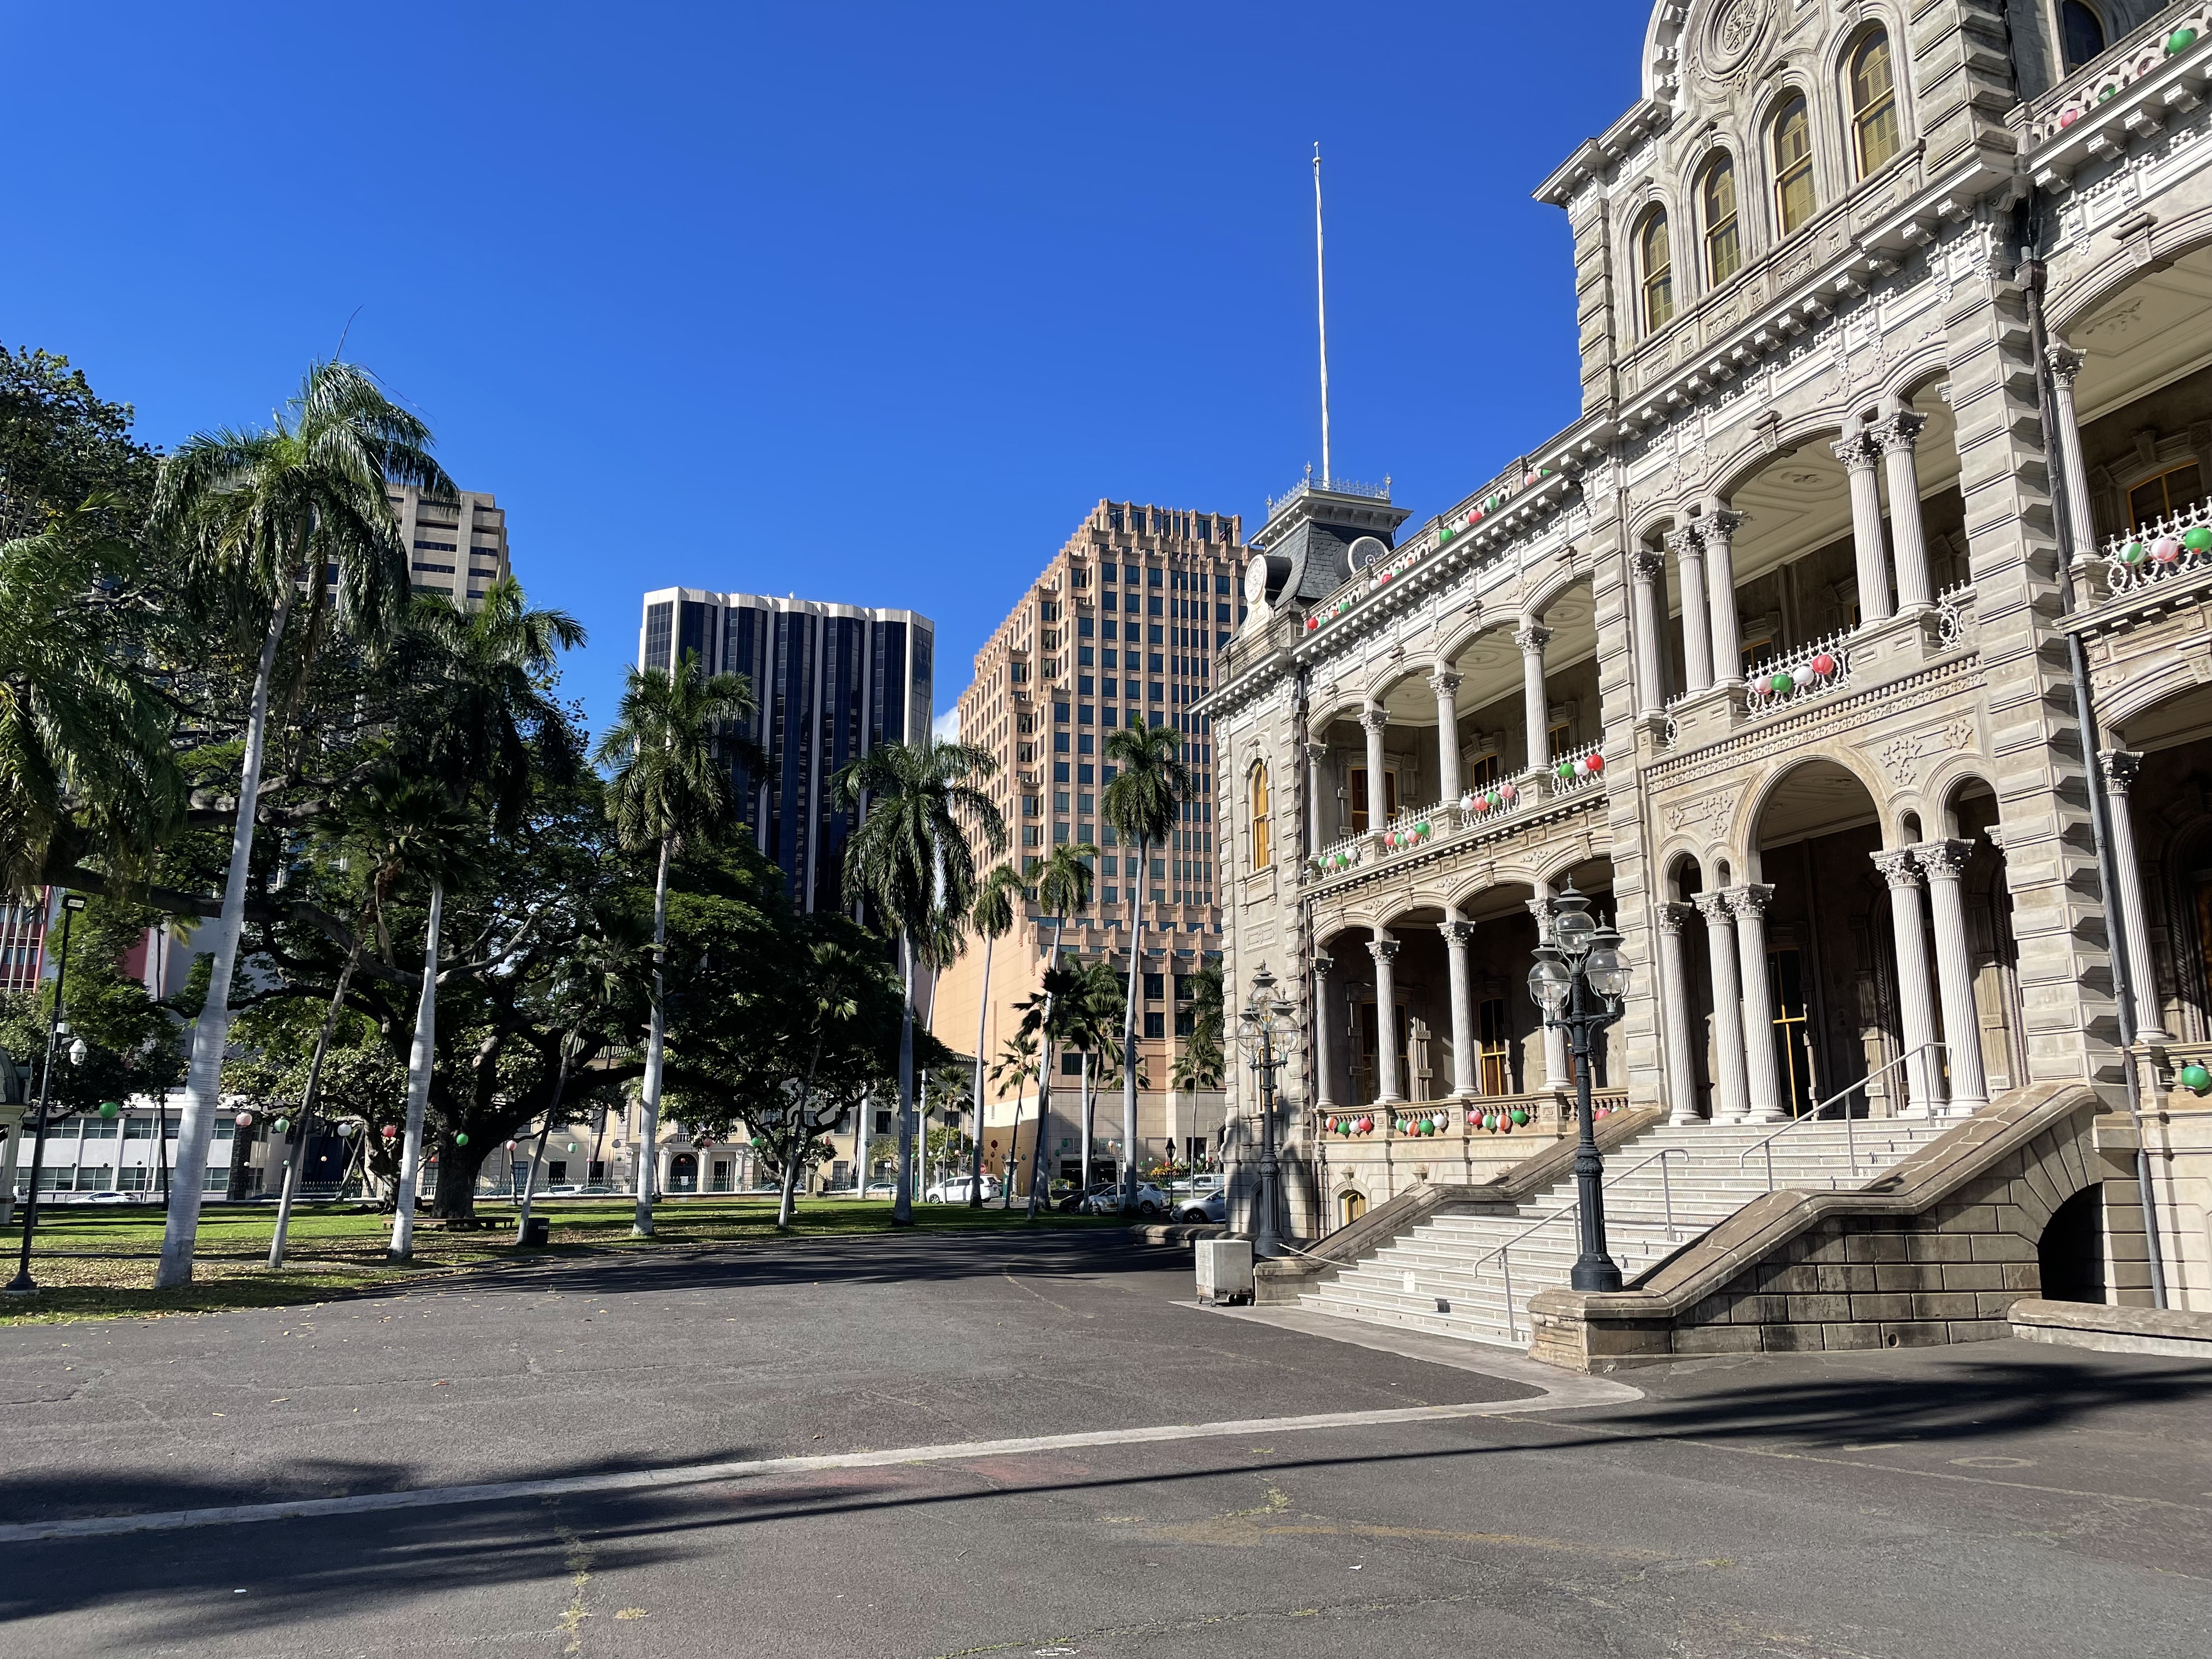 Iolani Palace and downtown Honolulu